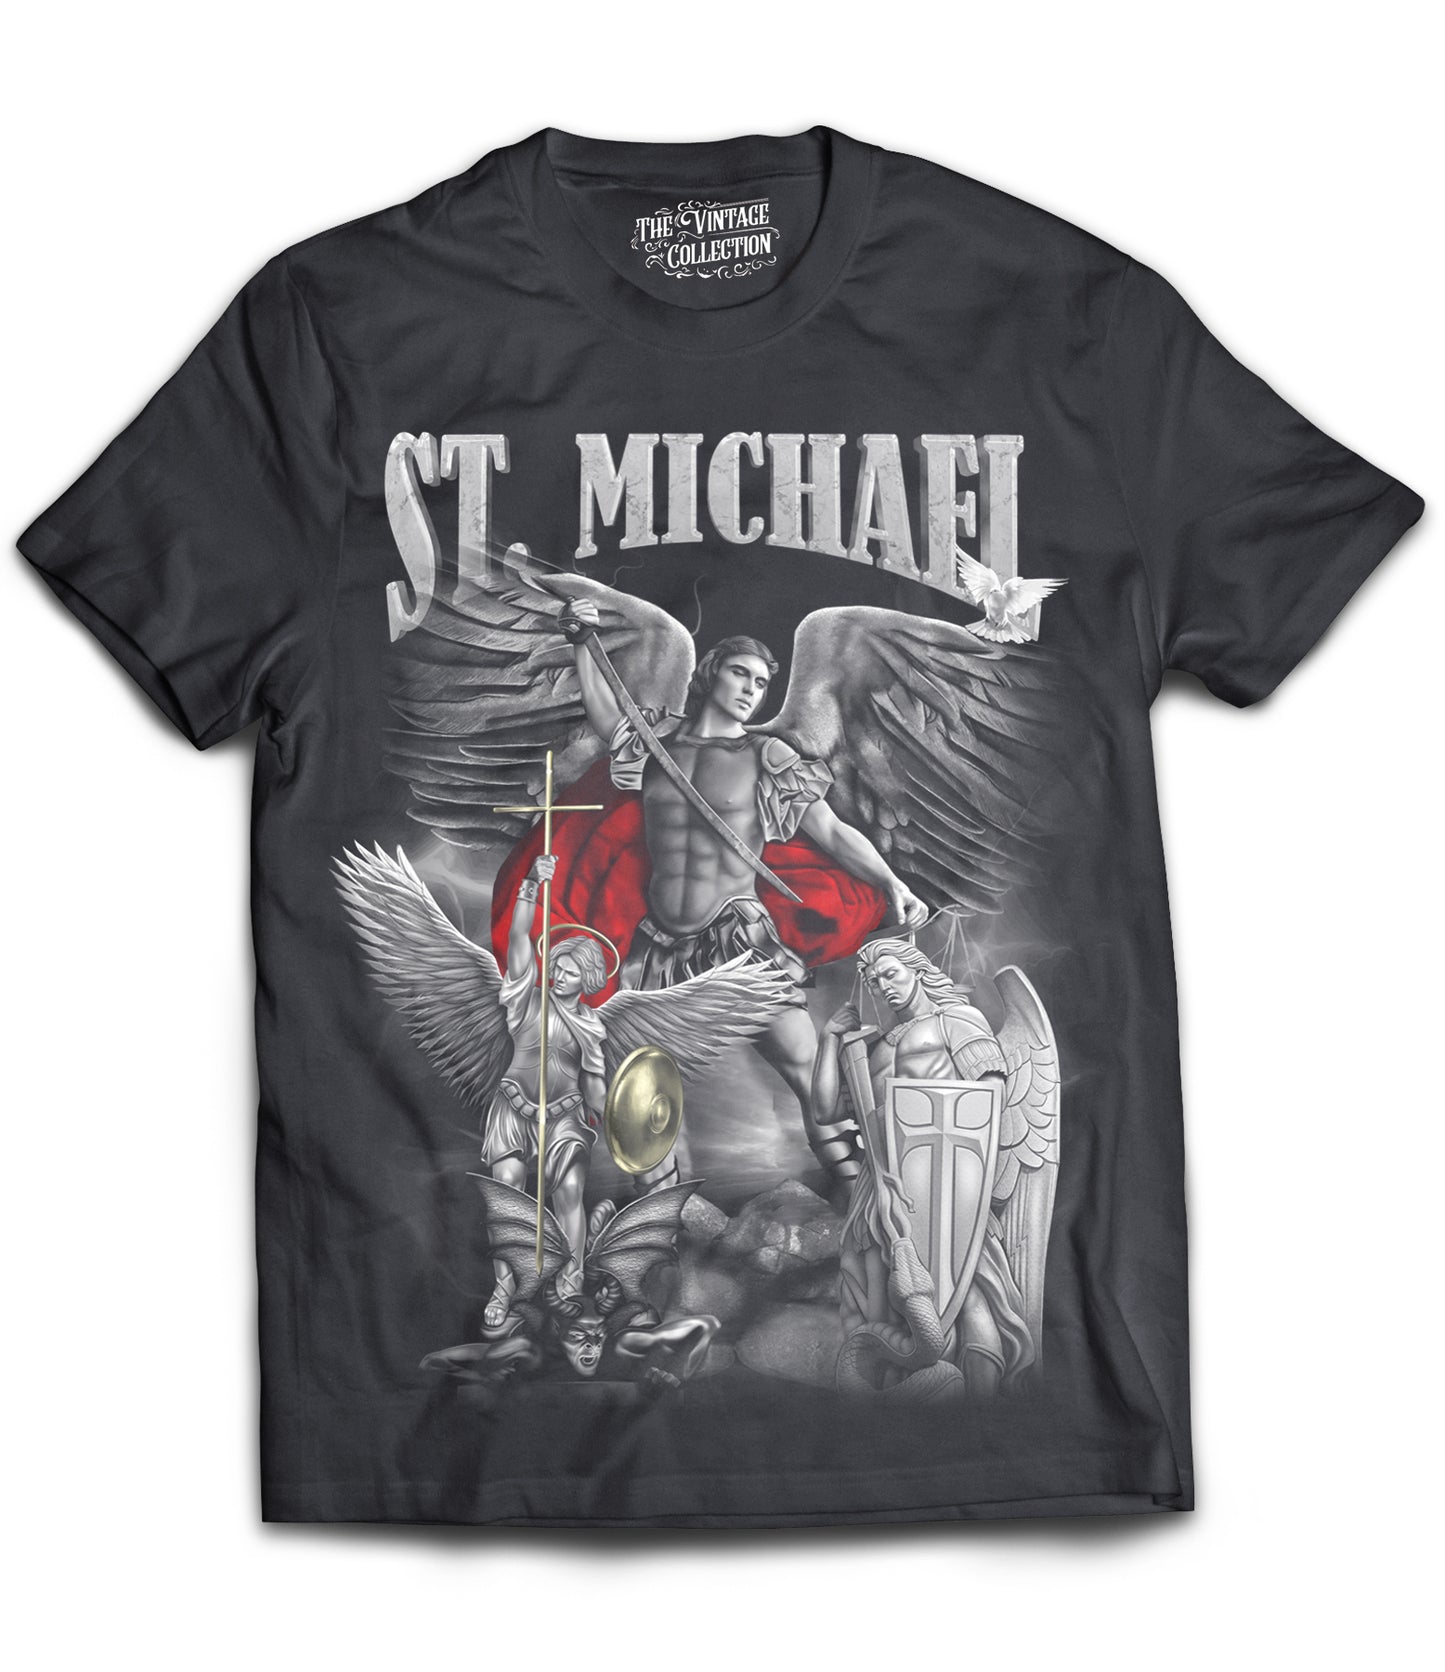 St. Michael Tribute Shirt (Black)